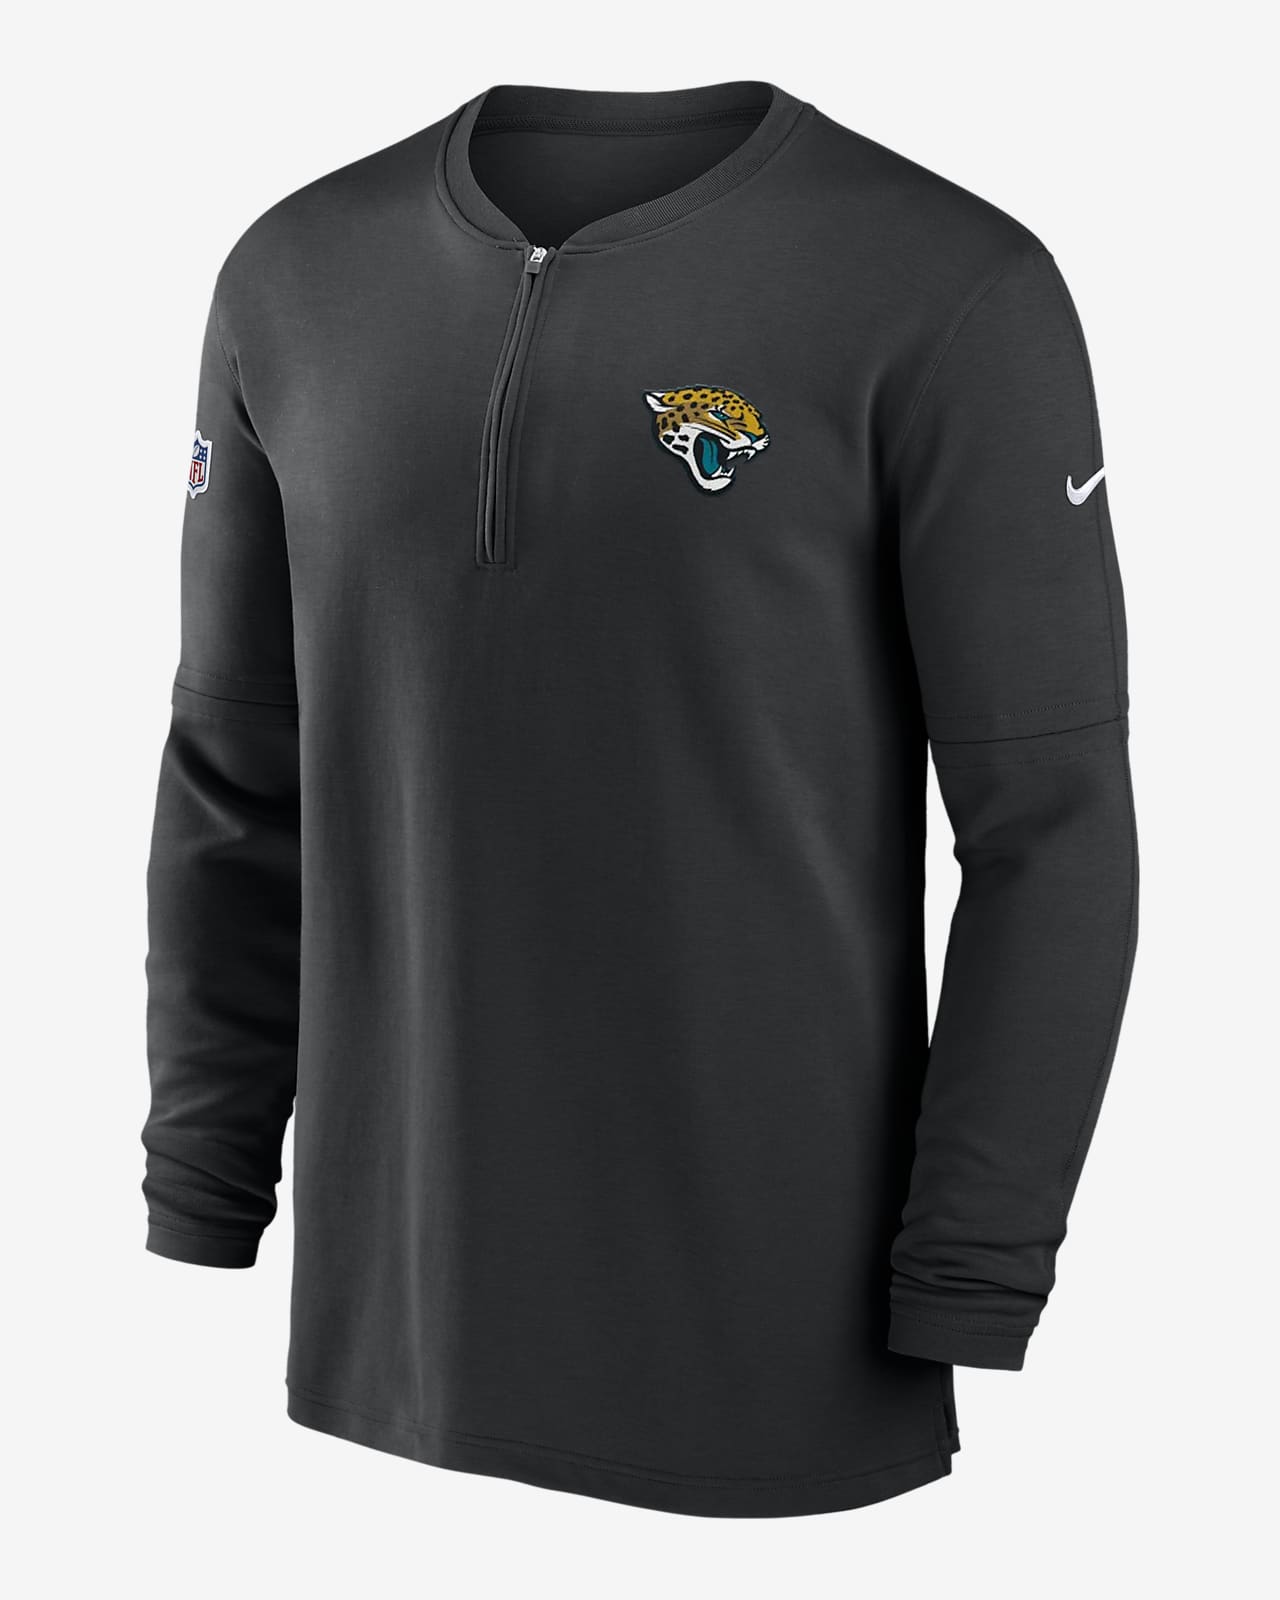 Jacksonville Jaguars Sideline Men’s Nike Dri-FIT NFL 1/2-Zip Long-Sleeve Top